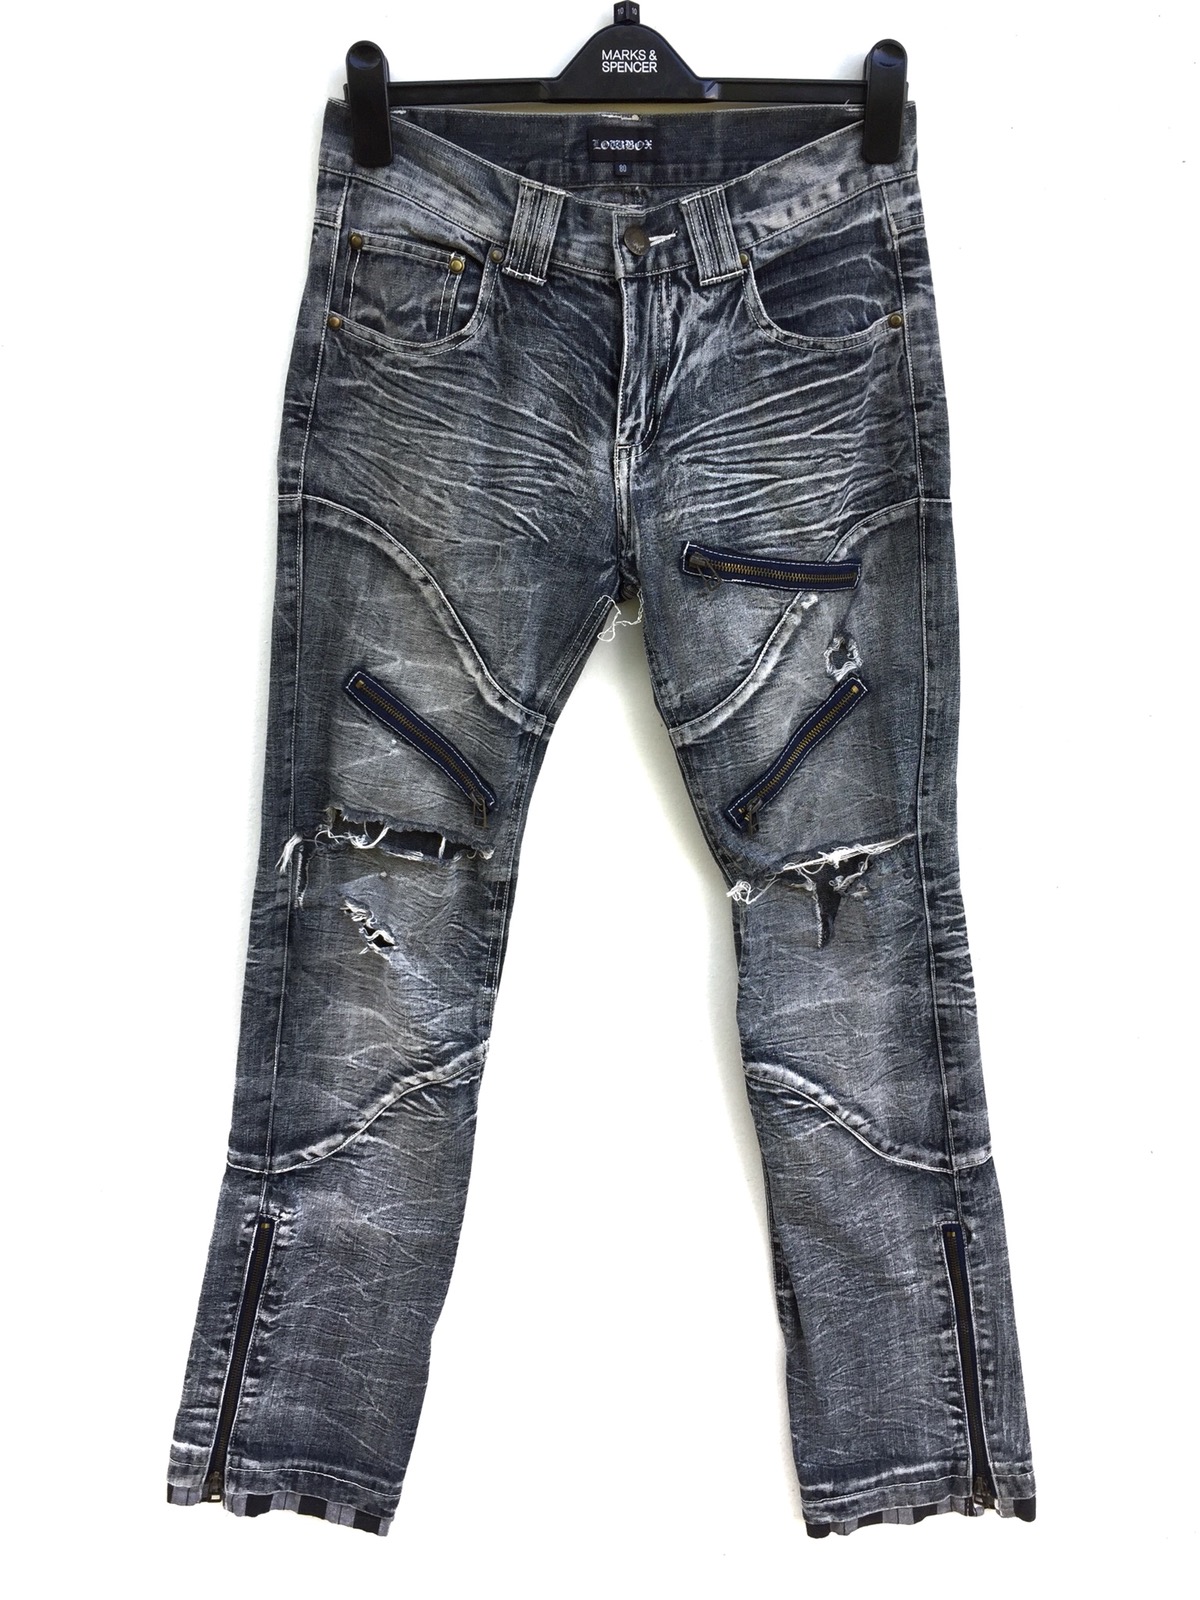 Distressed Denim - Japanese Brand Lowbox Distressed Jeans Number Nine Style